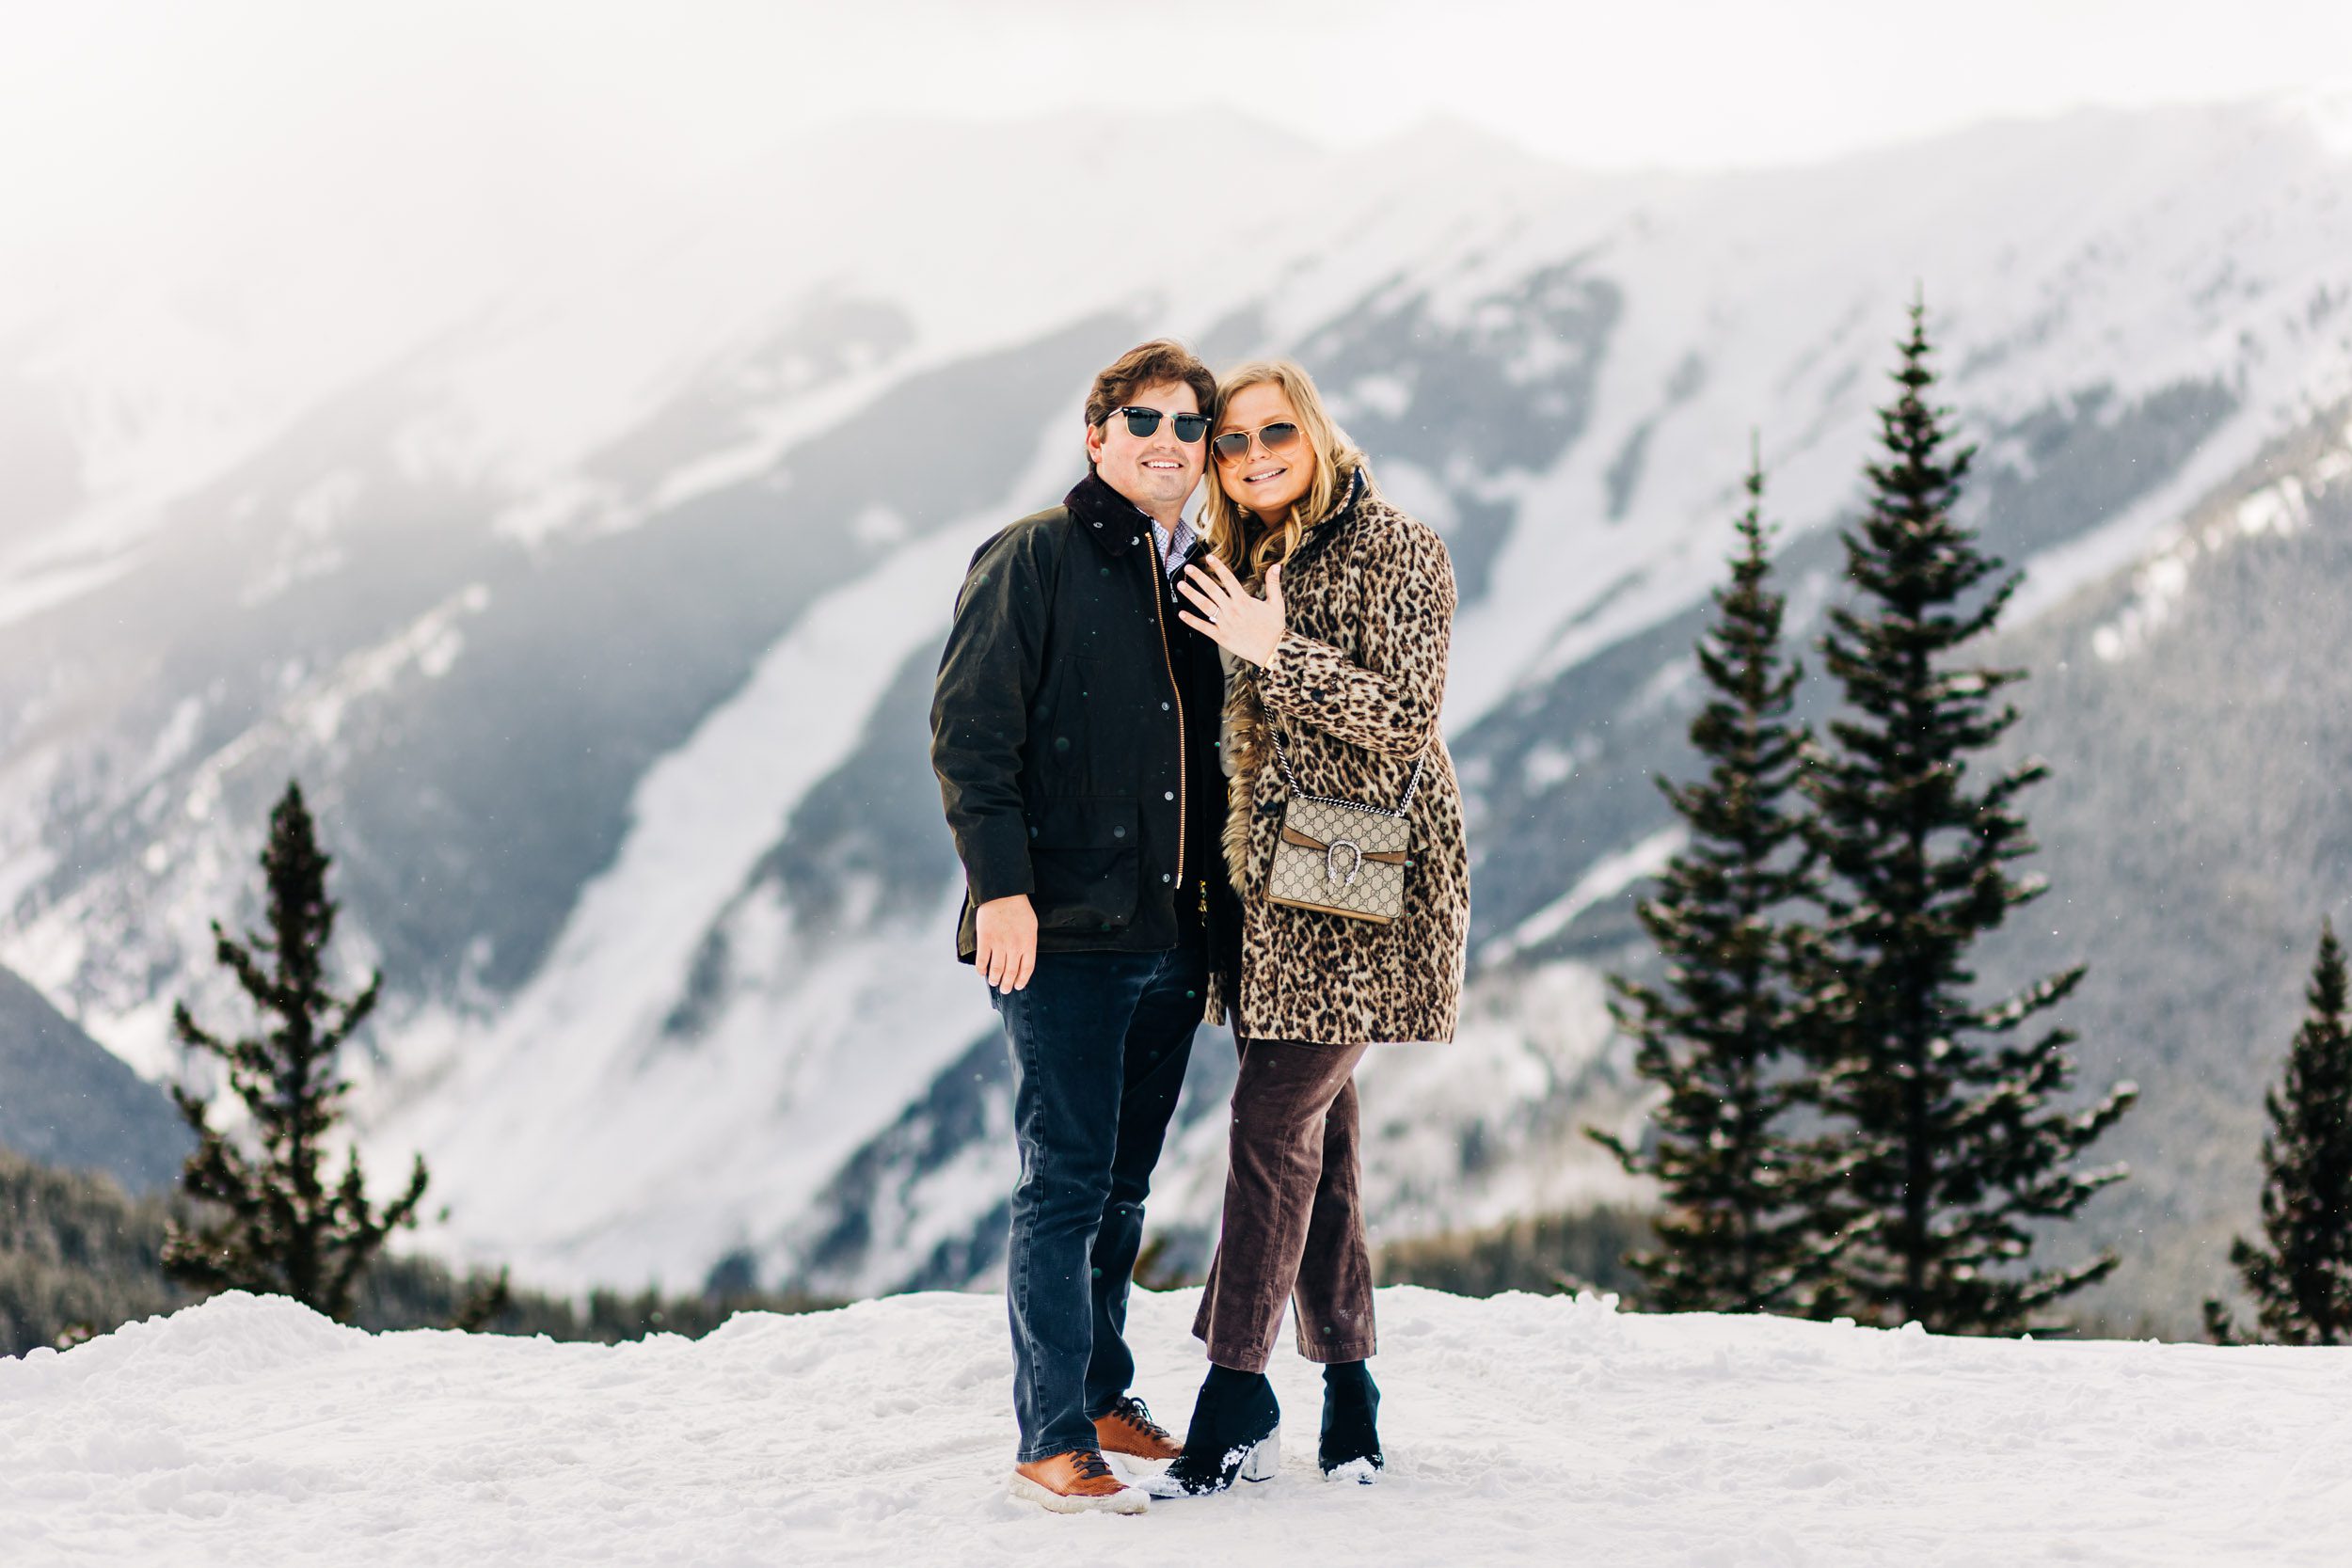 Aspen mountain ski resort engagement photo